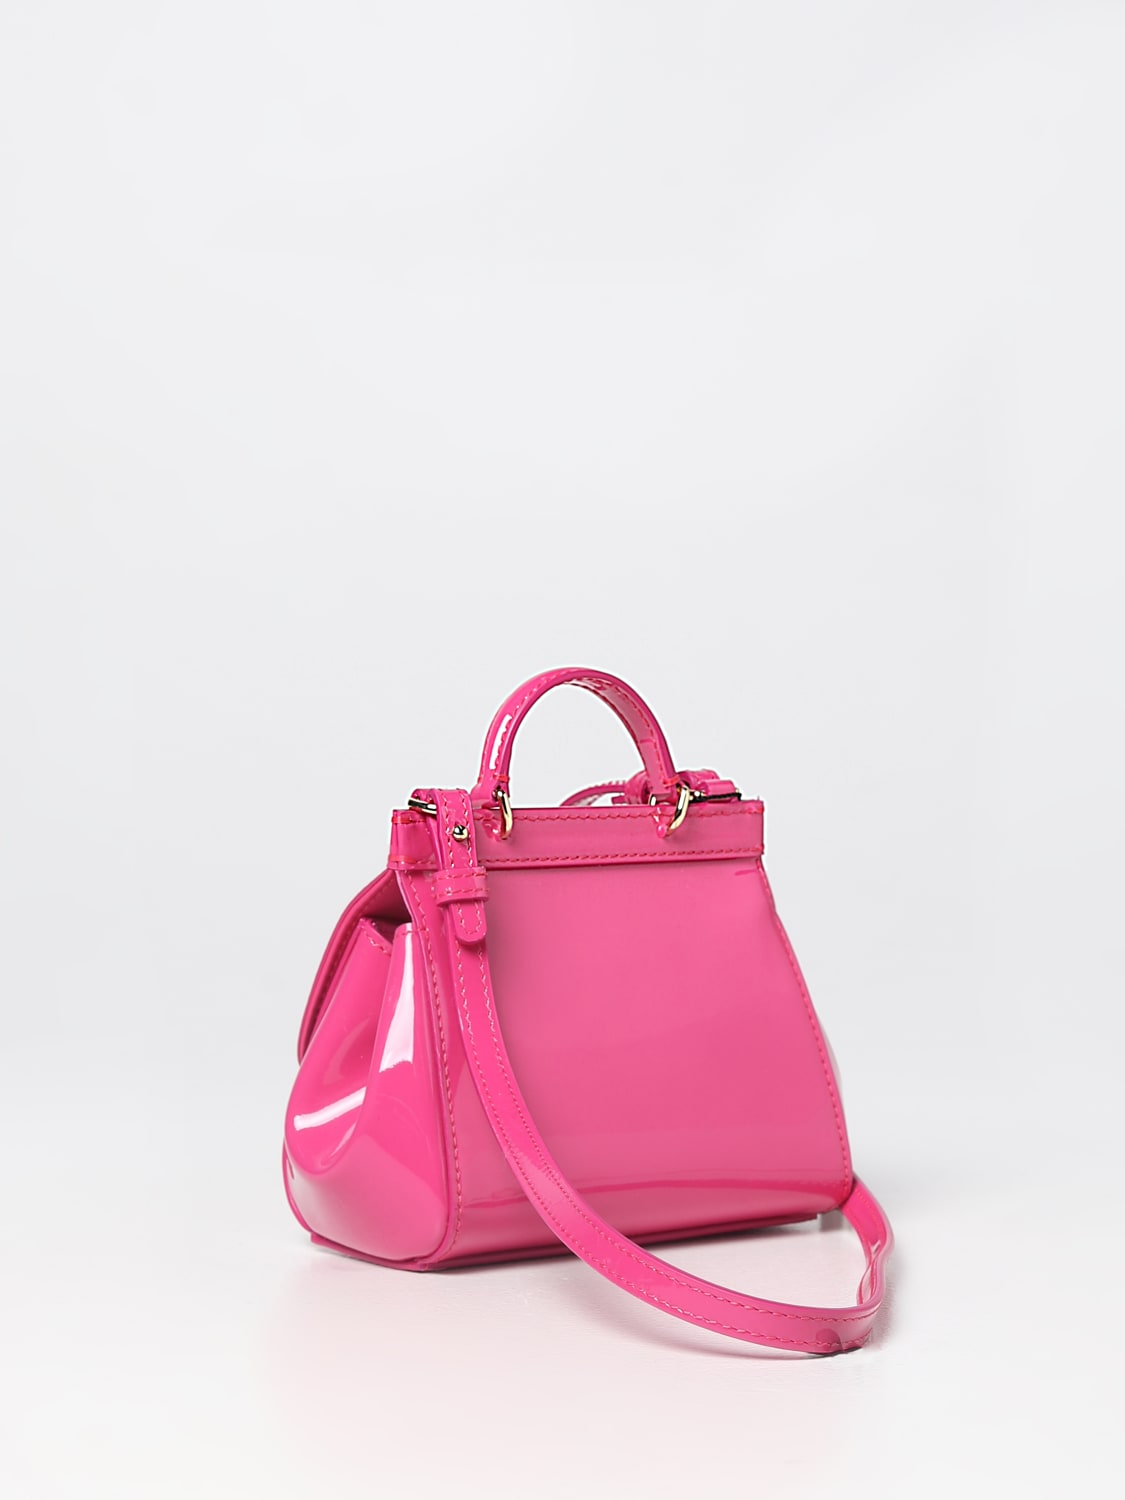 Dolce & Gabbana Hot Pink Leather Small Miss Sicily Shoulder Bag